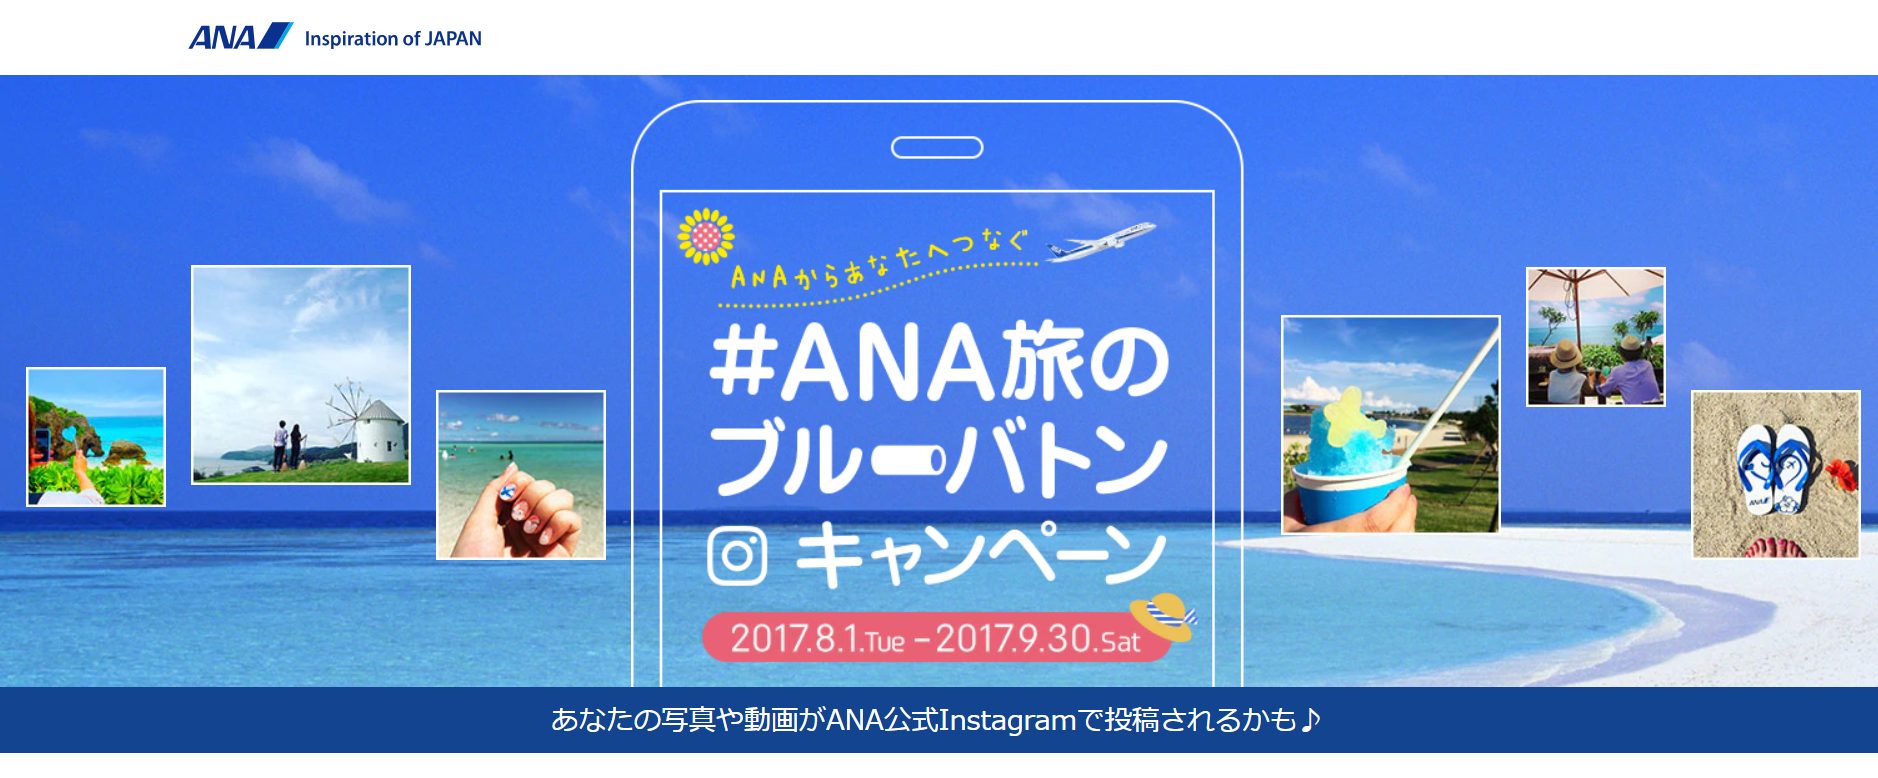 instagram-campaign-ana